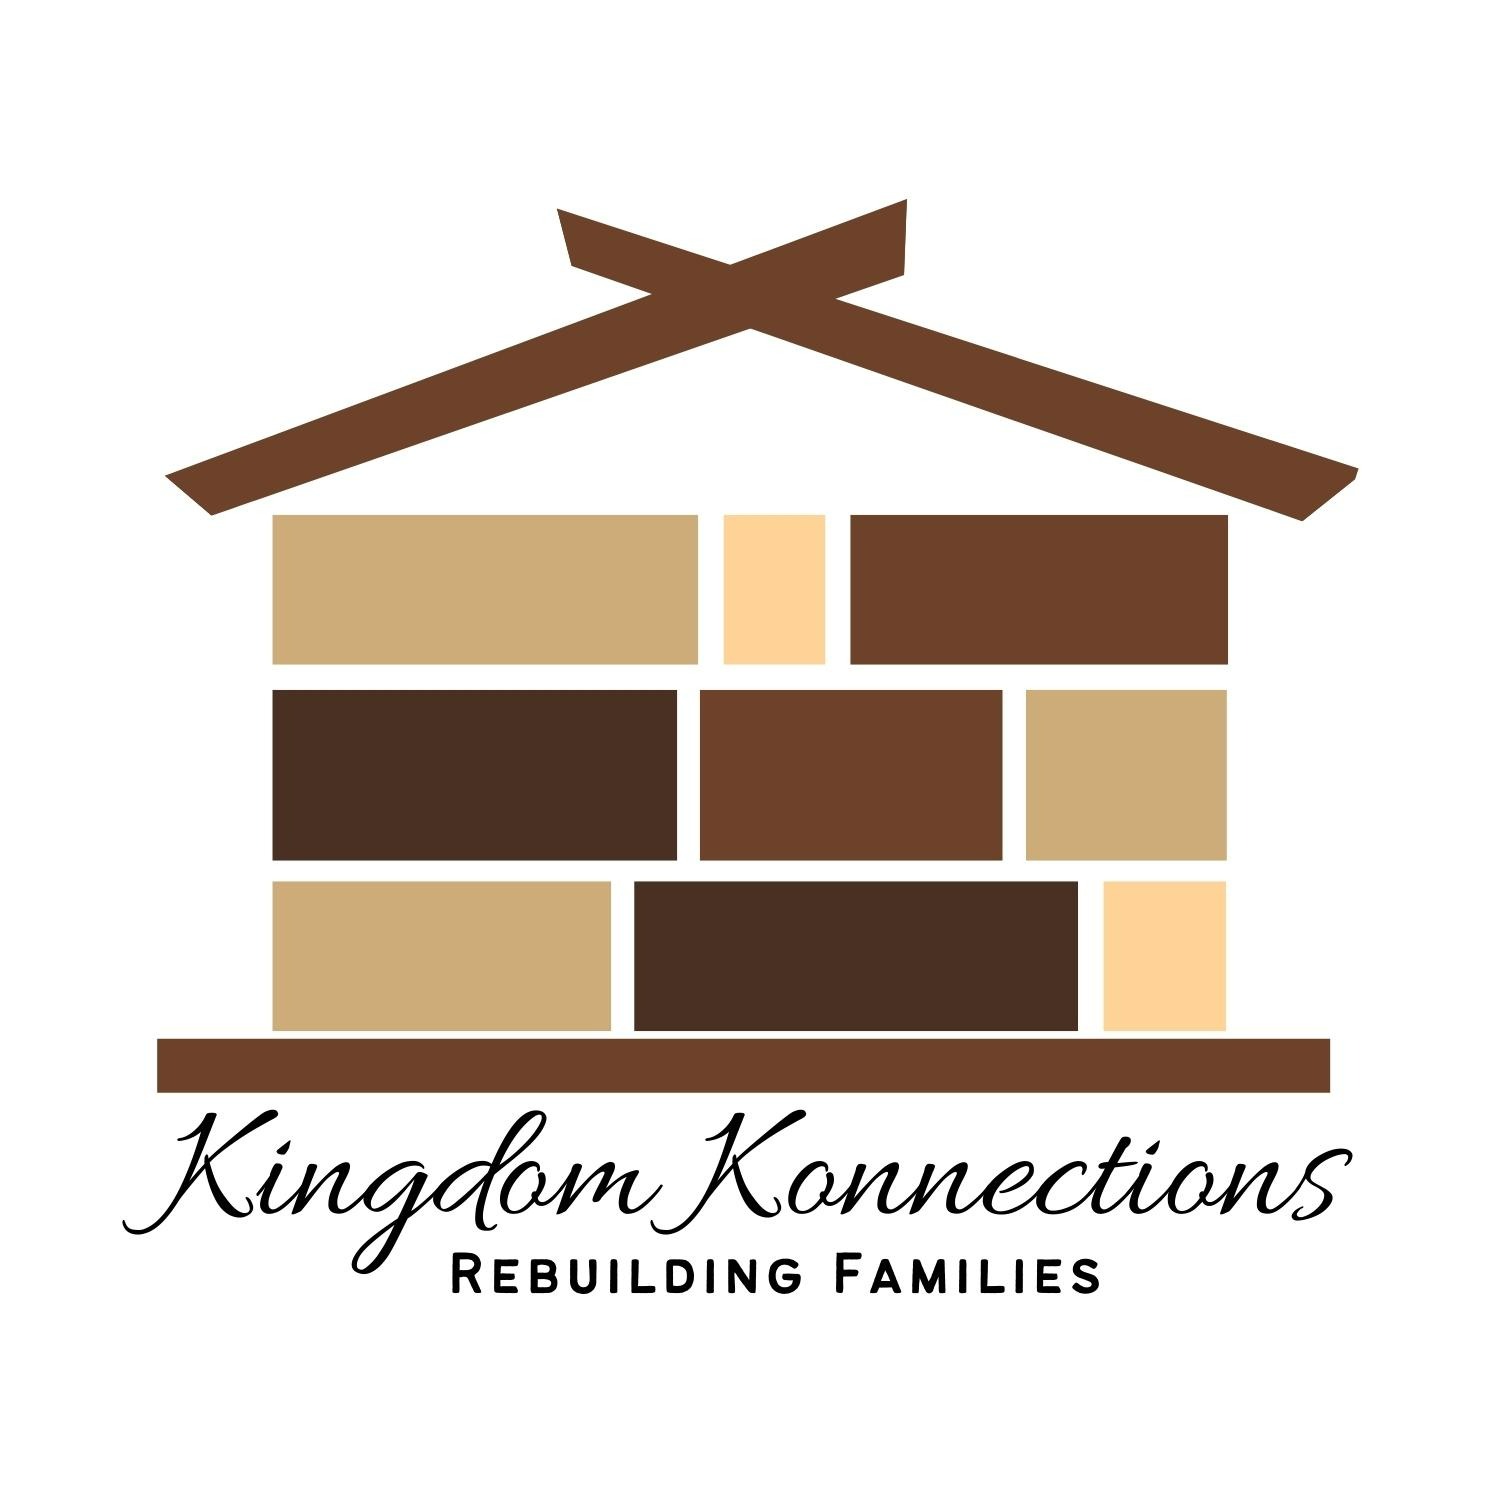 Kingdom Konnections logo